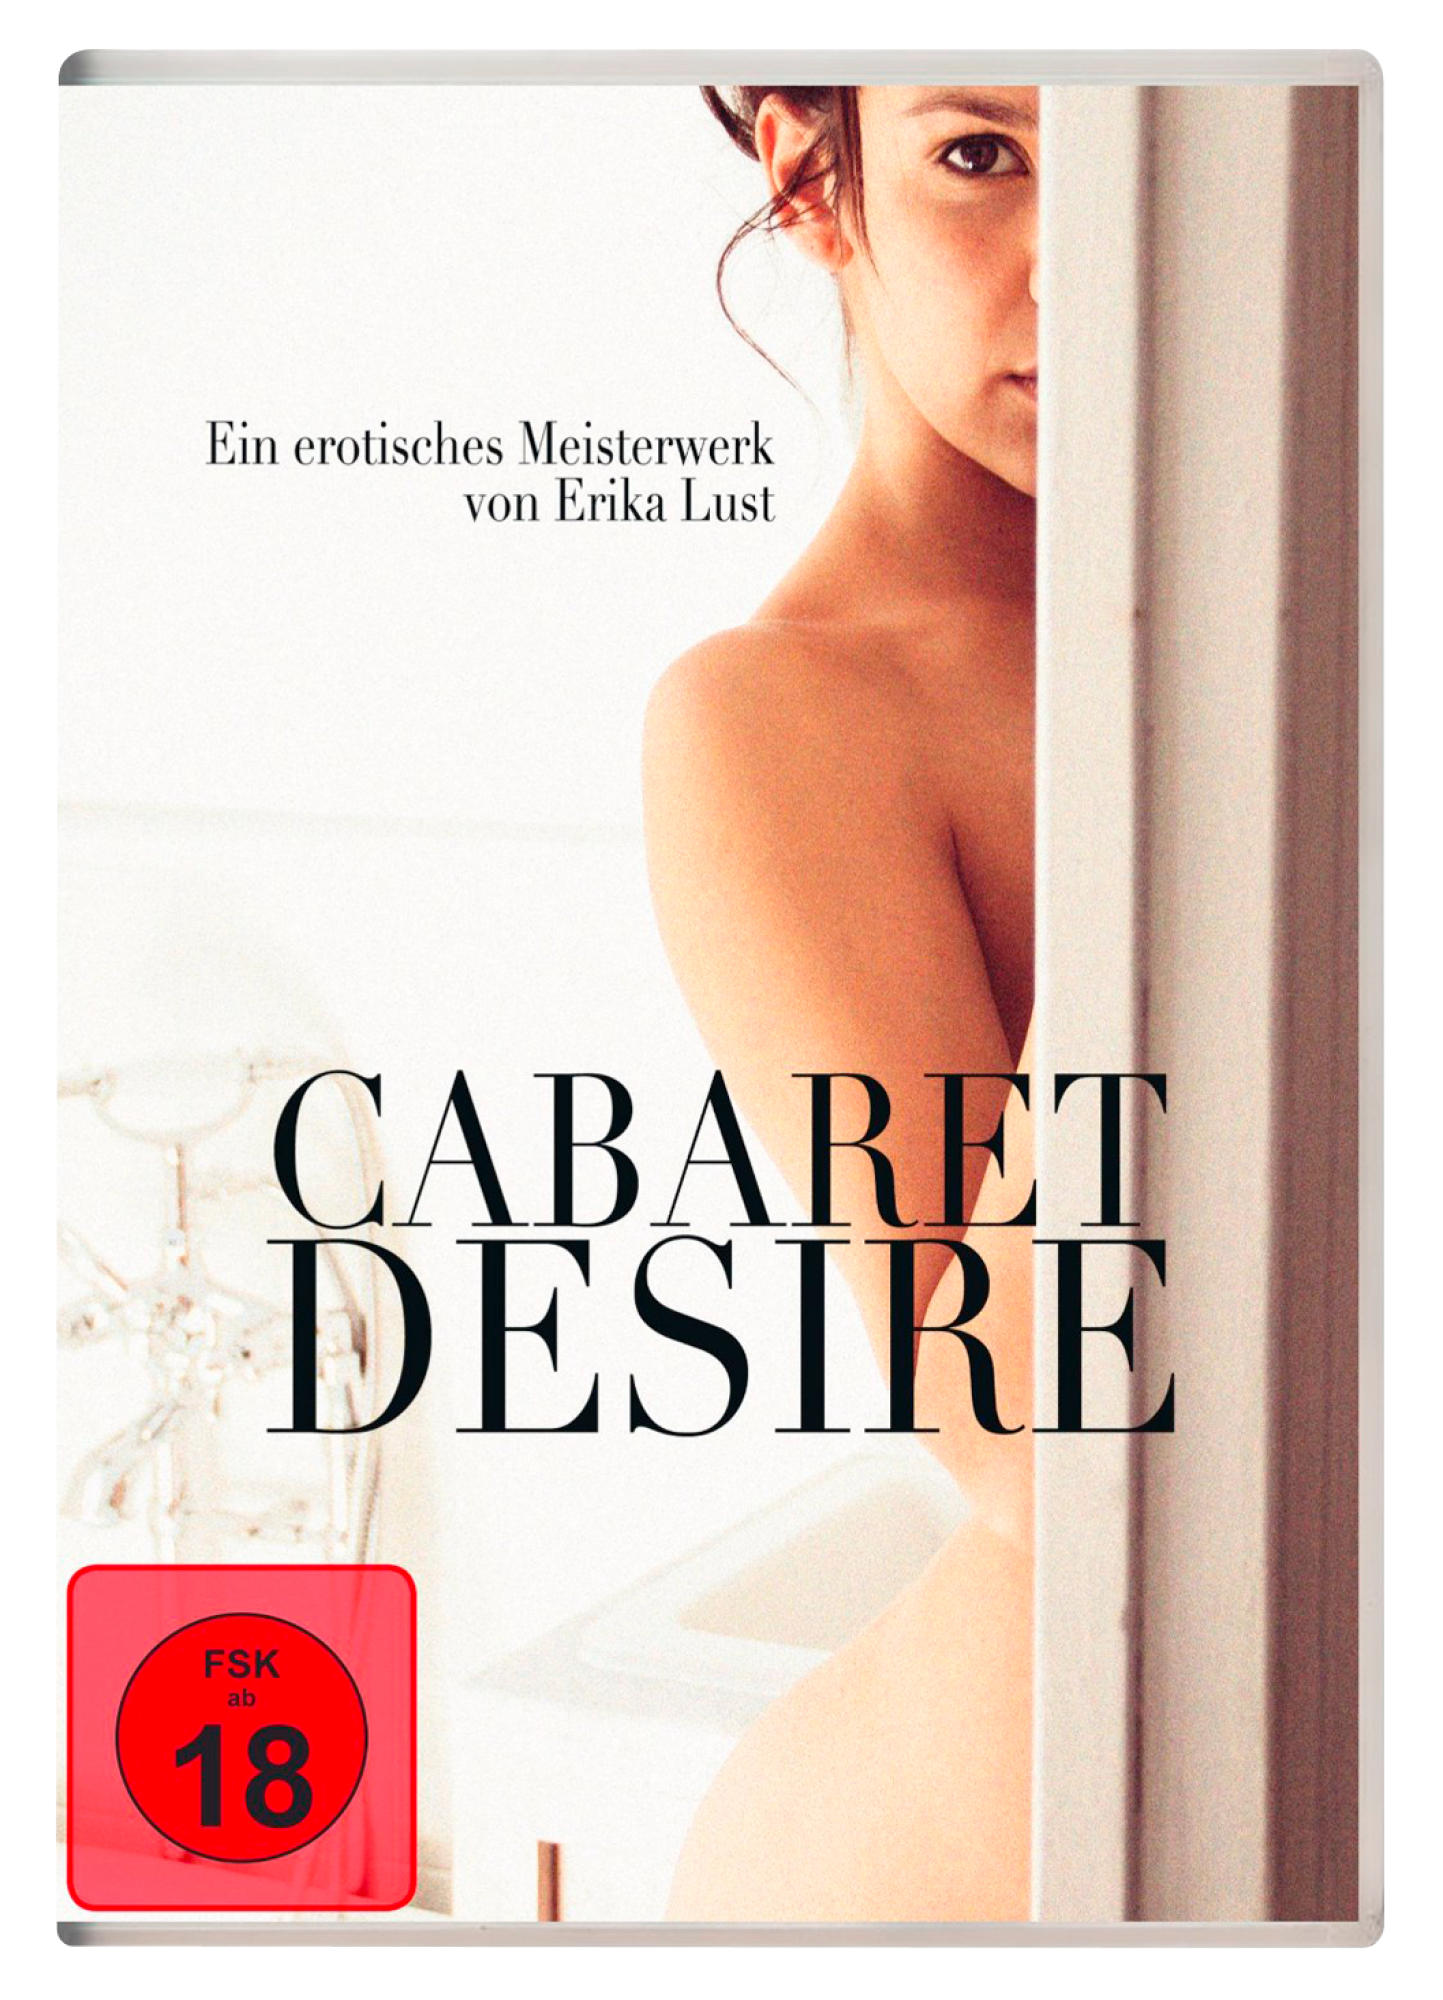 DVD Desire Cabaret